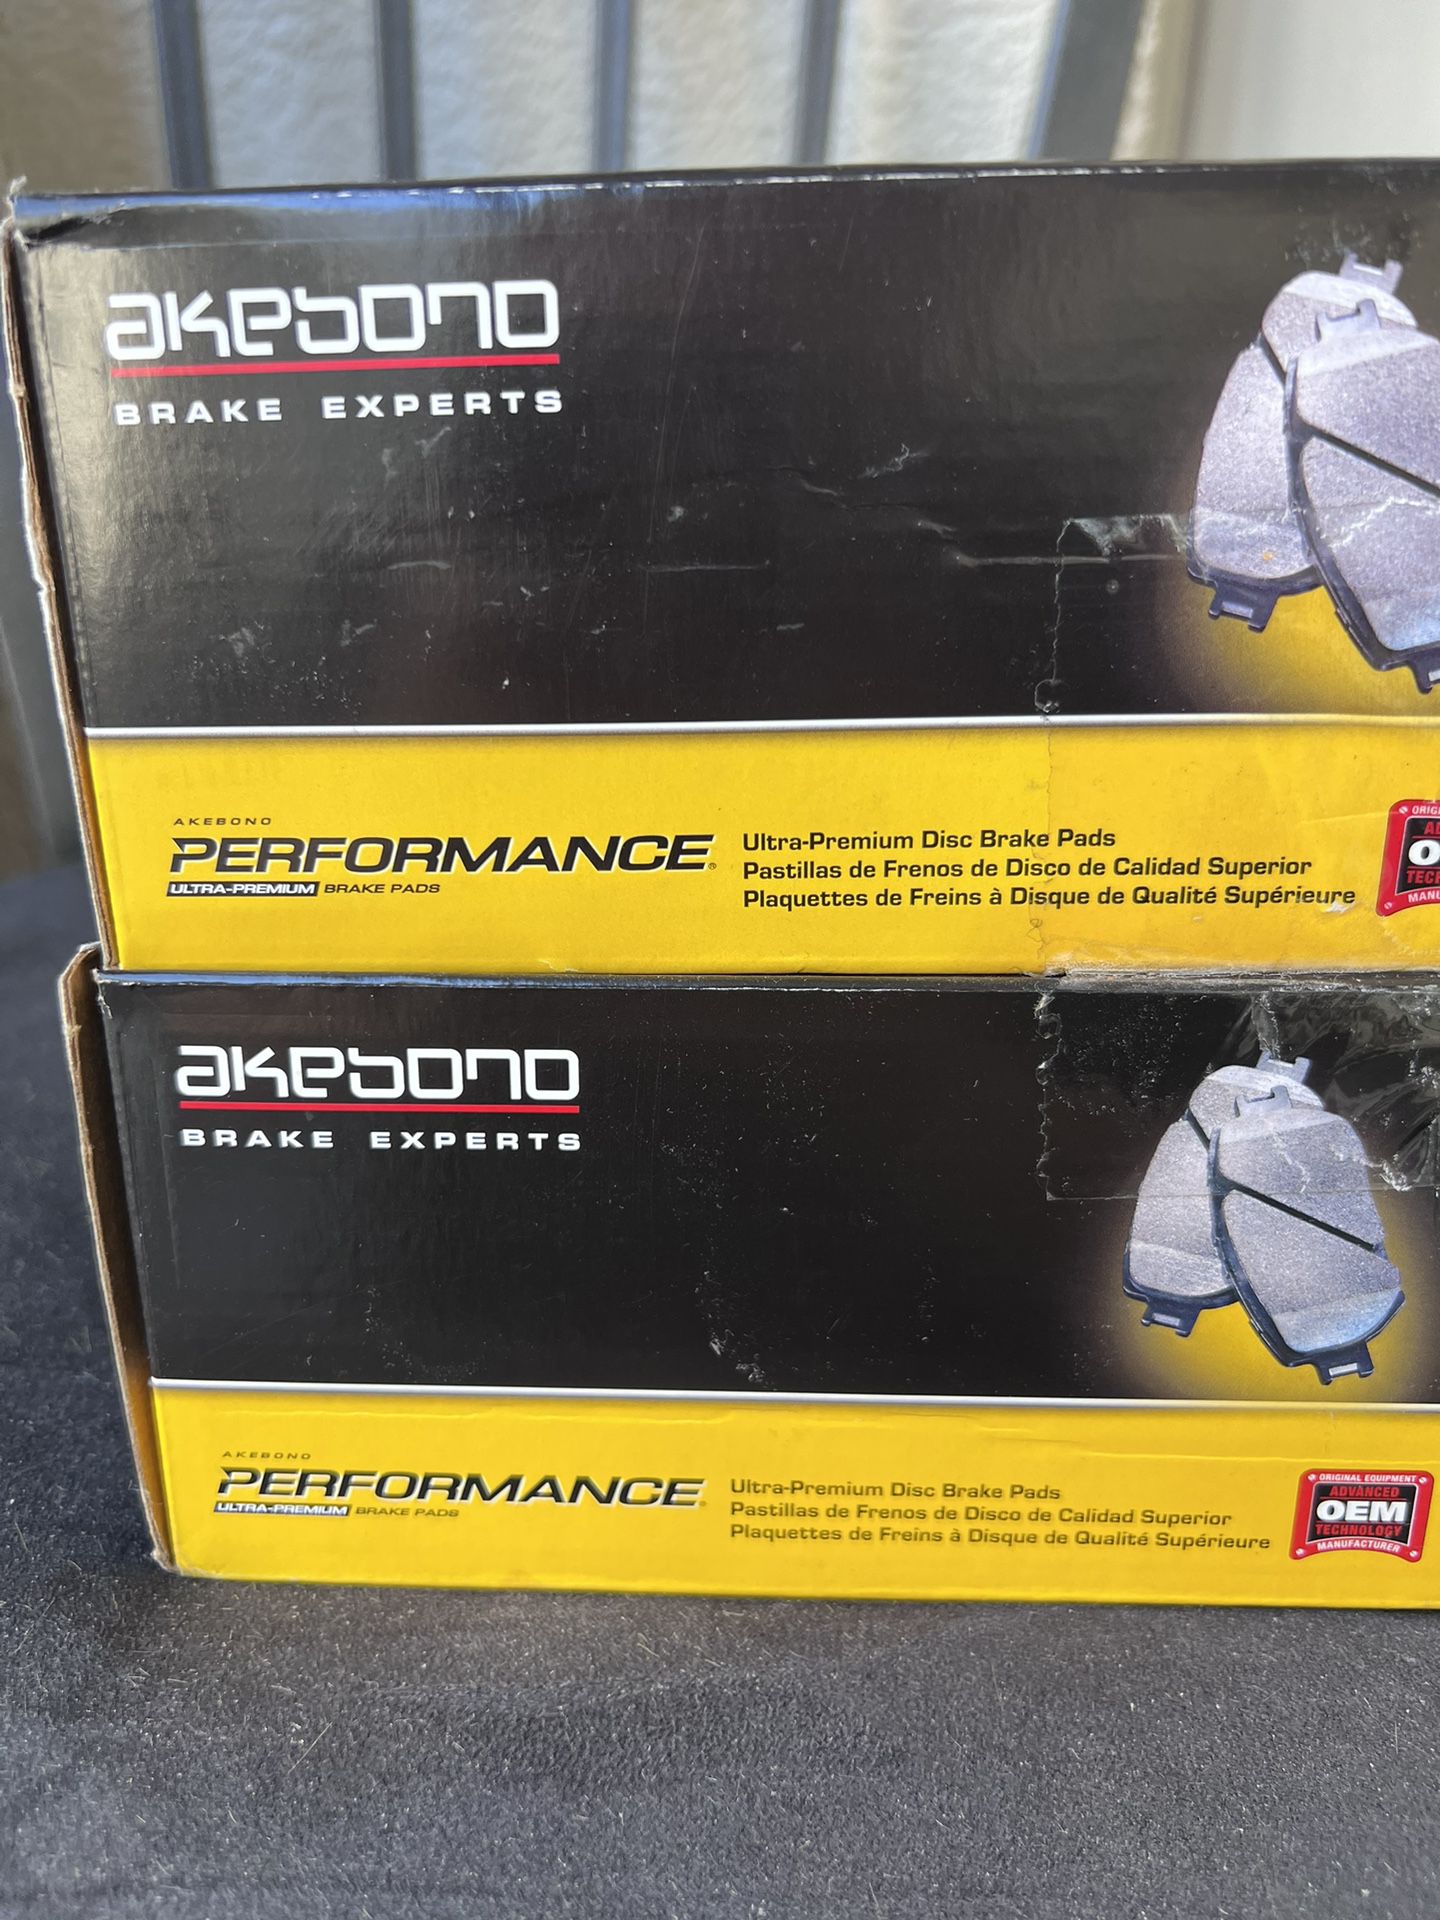 Akebono Front and Rear Brake Pads $80